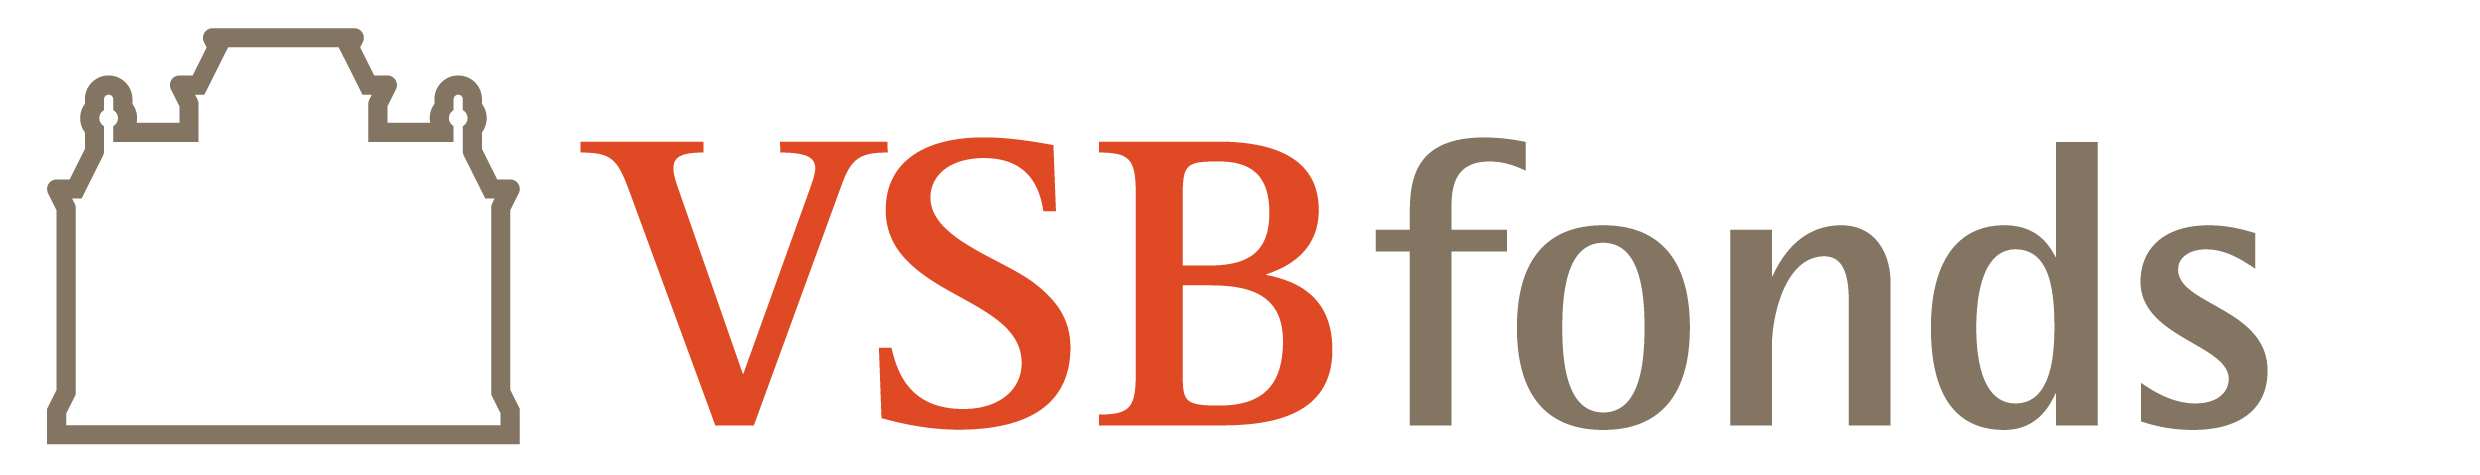 Logo_VSBfonds.jpg